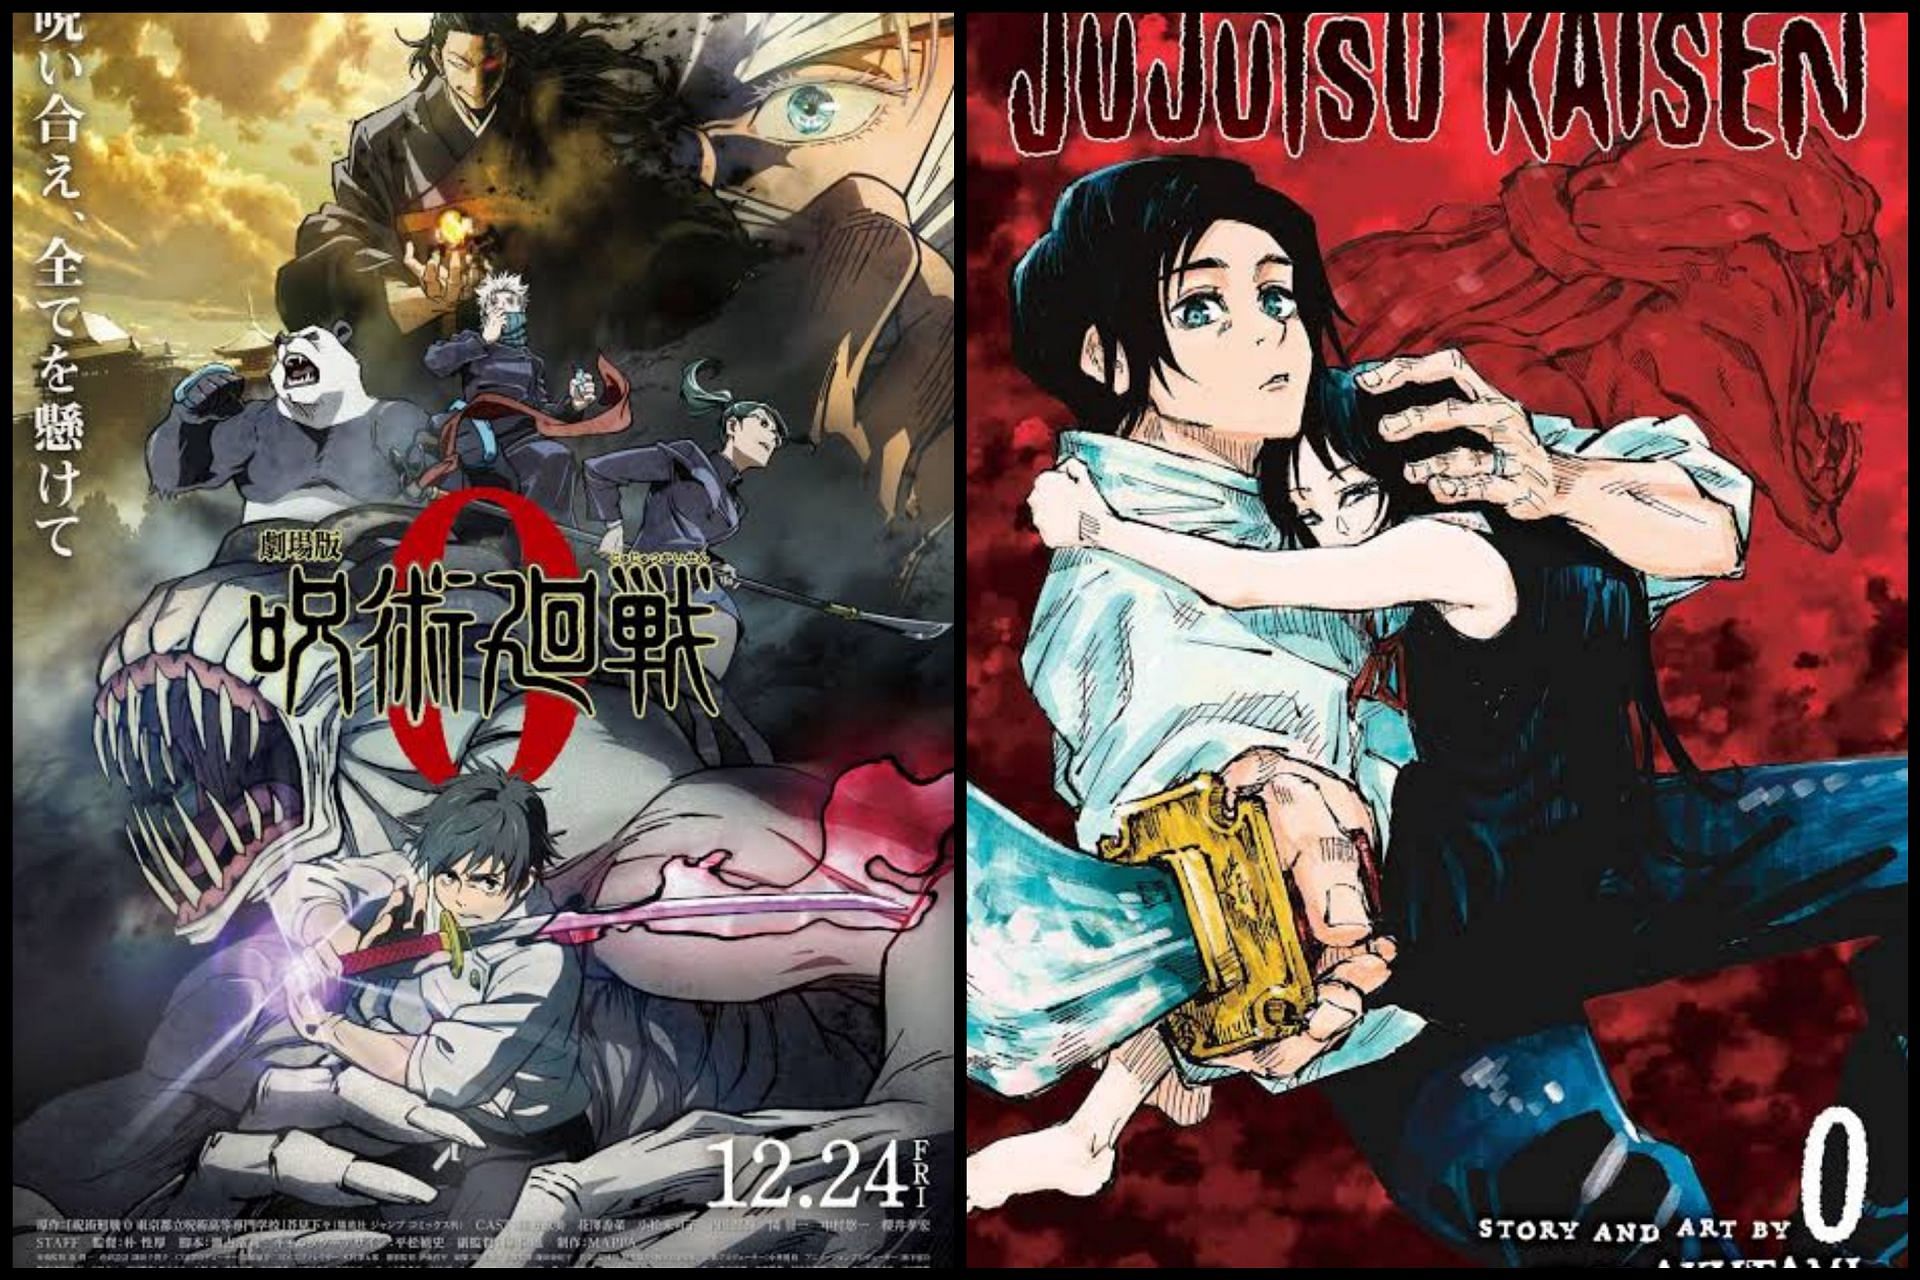 Jujutsu Kaisen 0 movie poster and manga volume cover (image via MAPPA and Shonen Jump respectively)